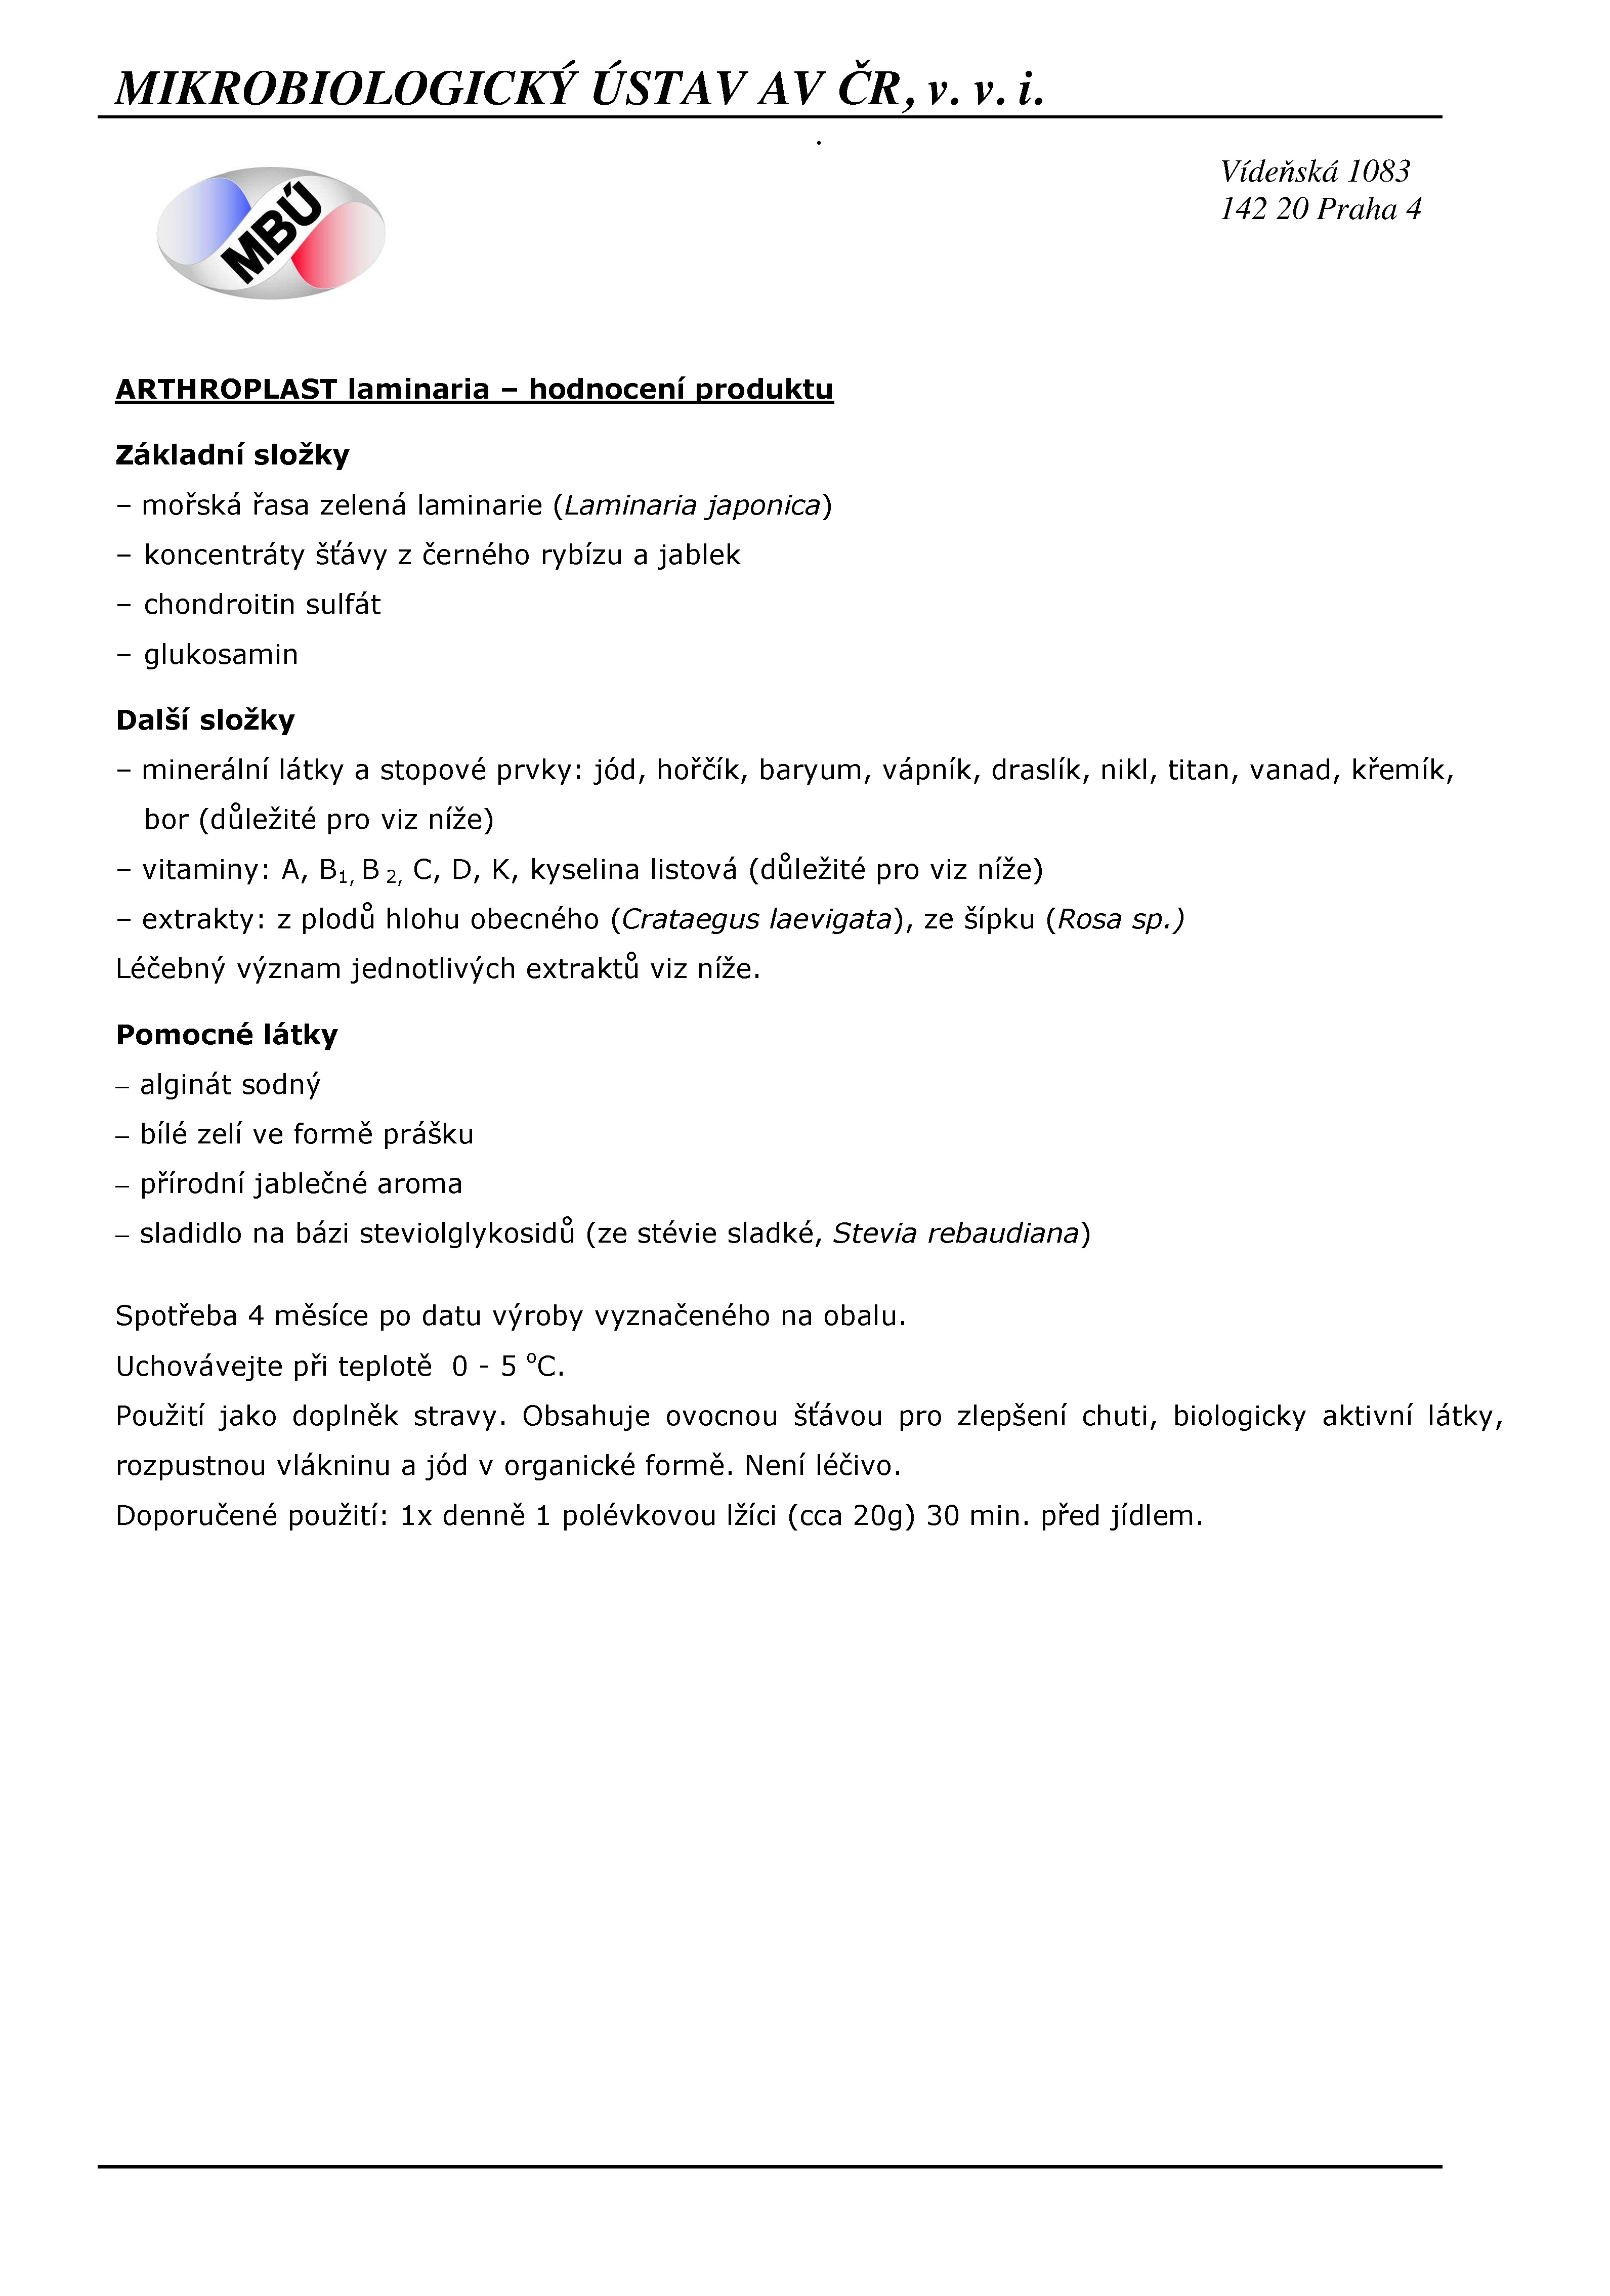 Arthroplast - Hodnocení MBÚ-2_Page_3